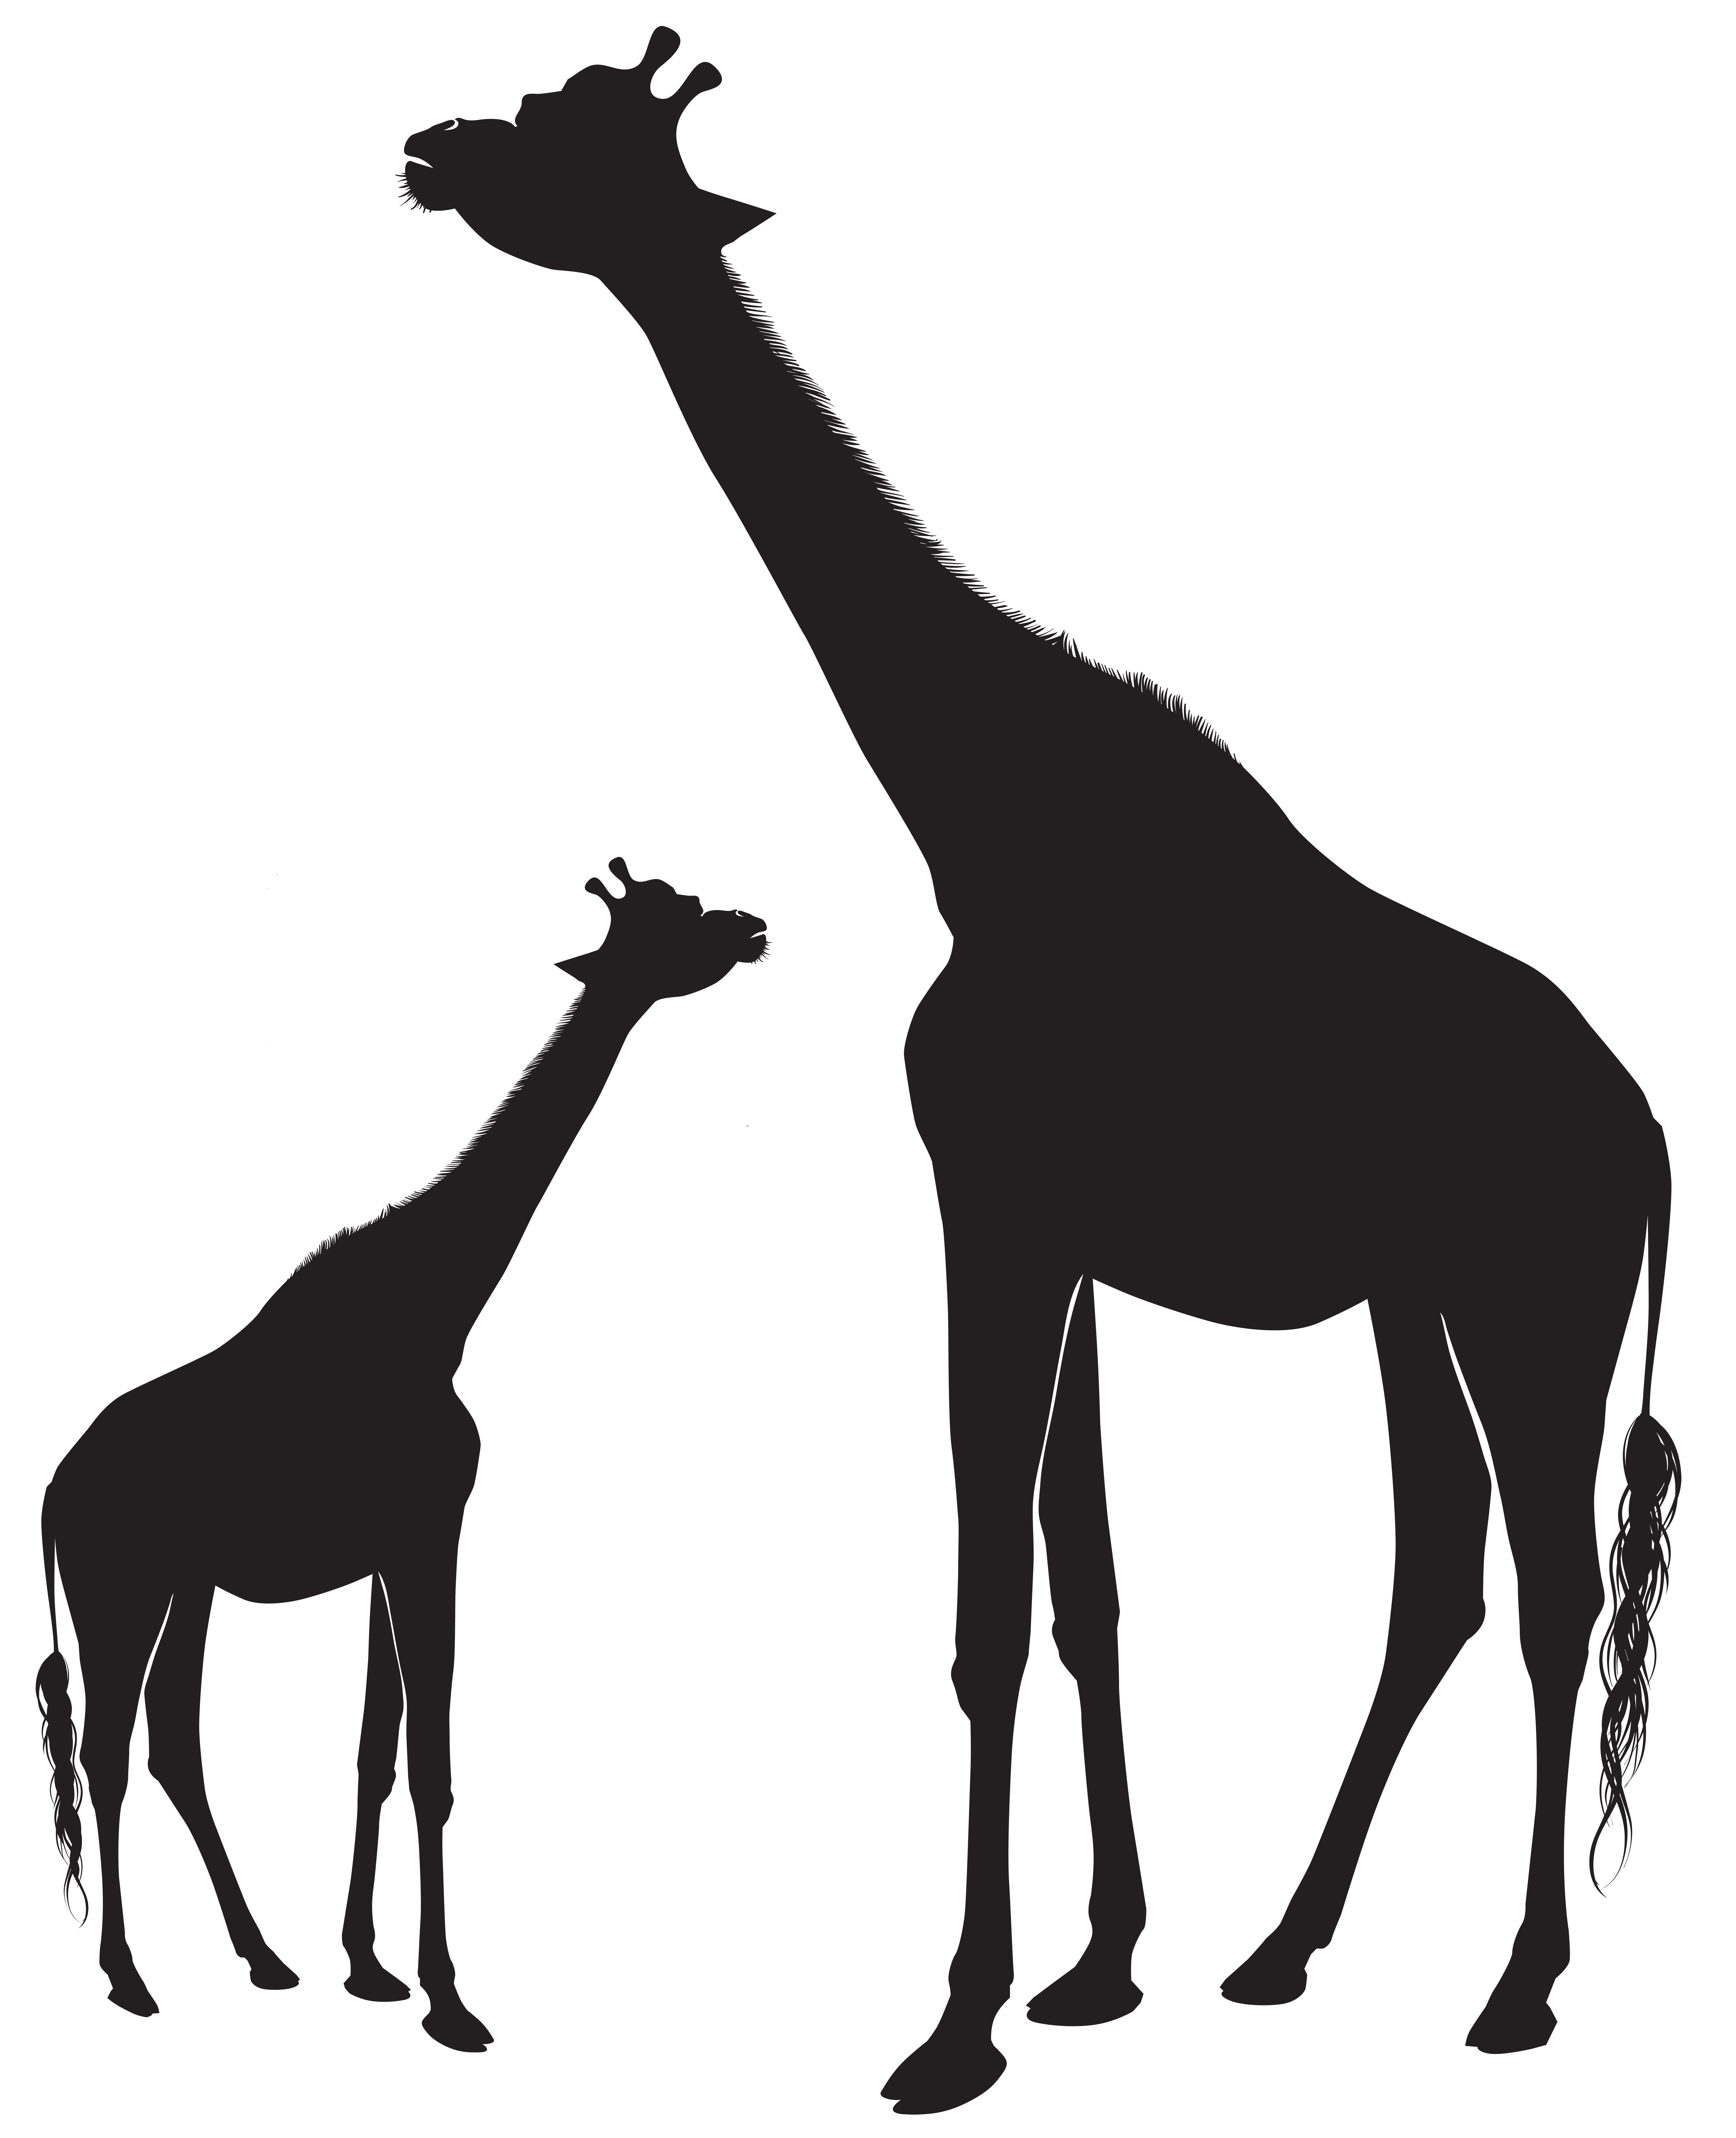 Giraffes Silhouette PNG Clip Art Image.